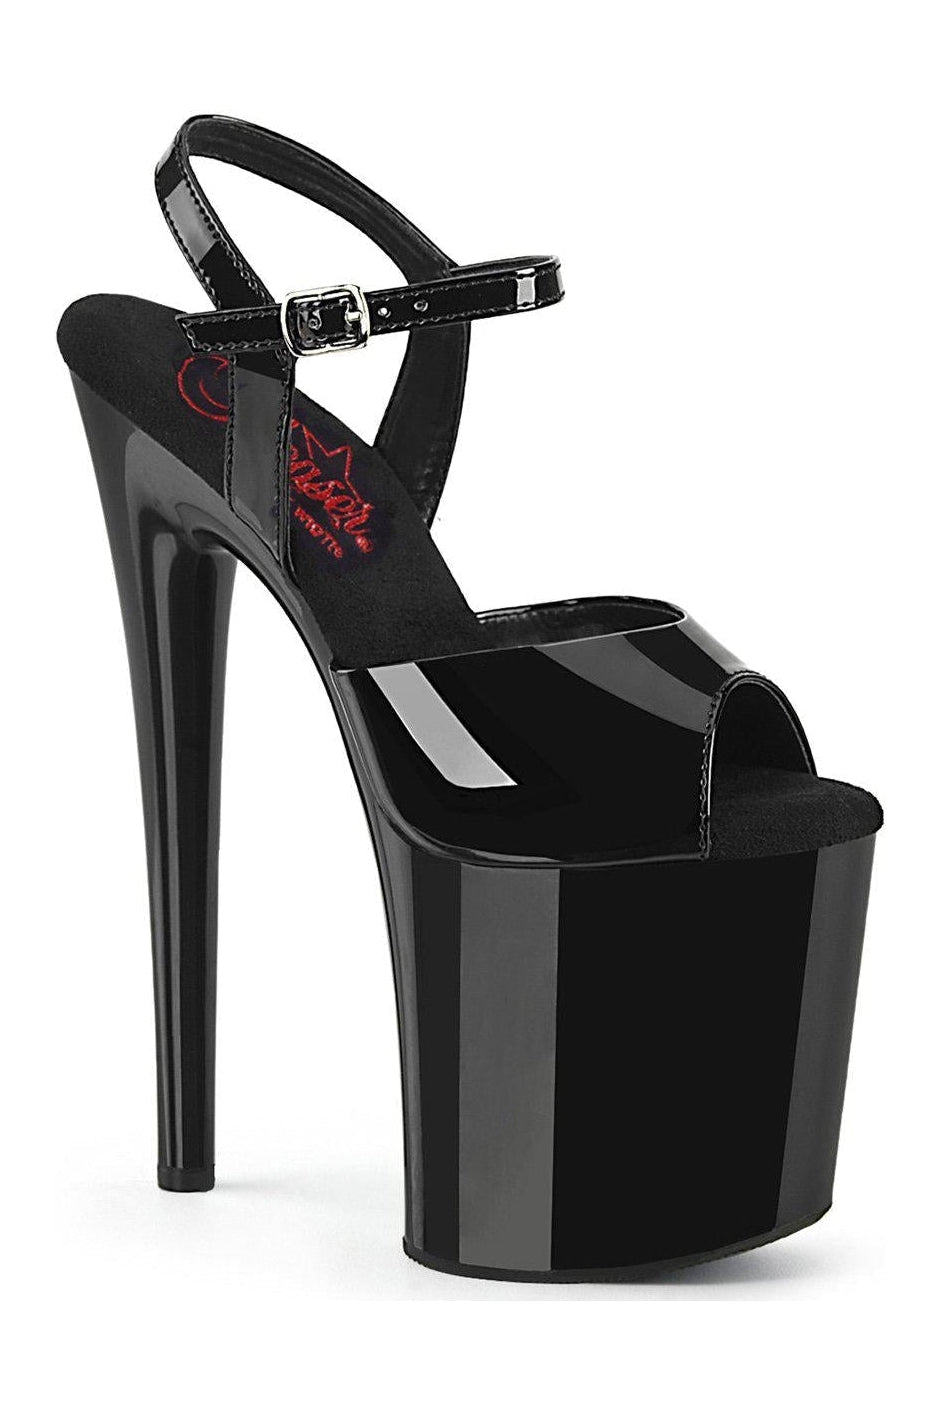 NAUGHTY-809 Sandal | Black Patent-Sandals-Pleaser-Black-6-Patent-SEXYSHOES.COM